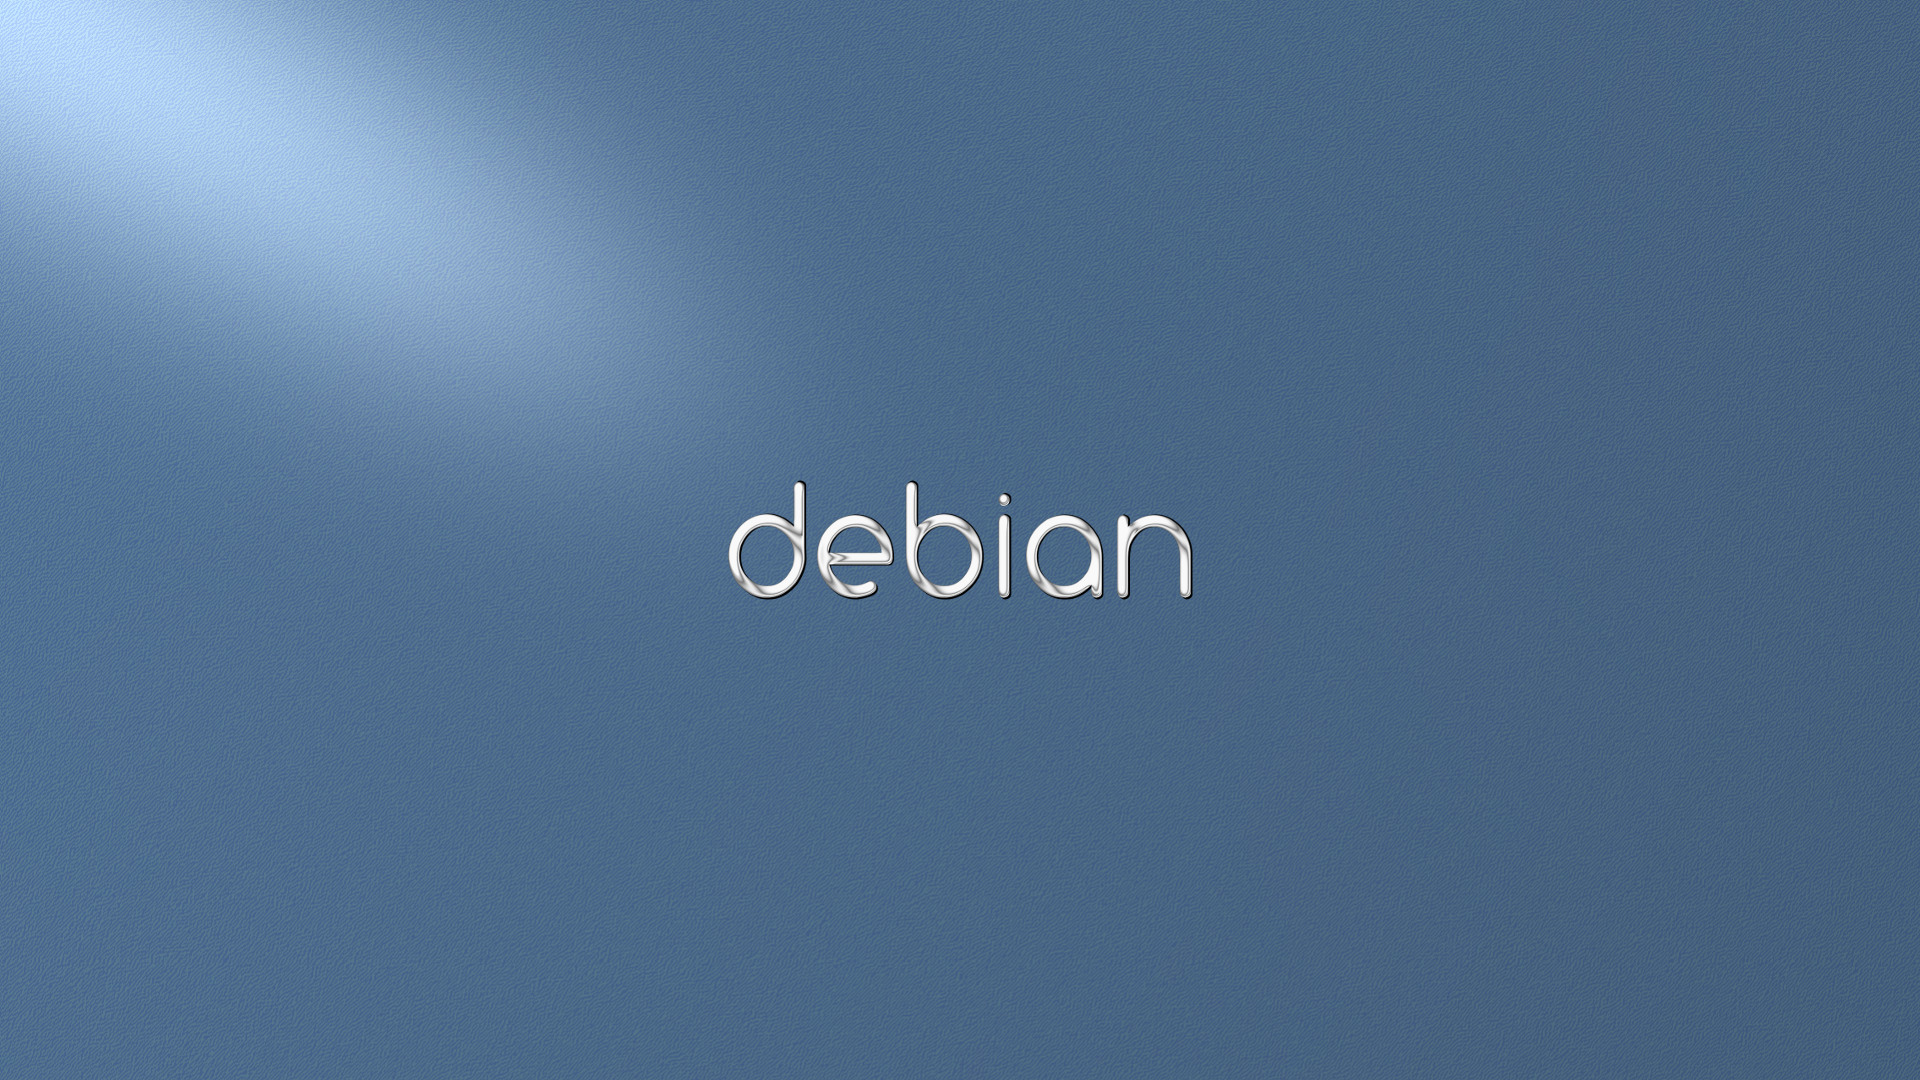 Debian Blue Texture Wallpaper By Ivanmladenovi